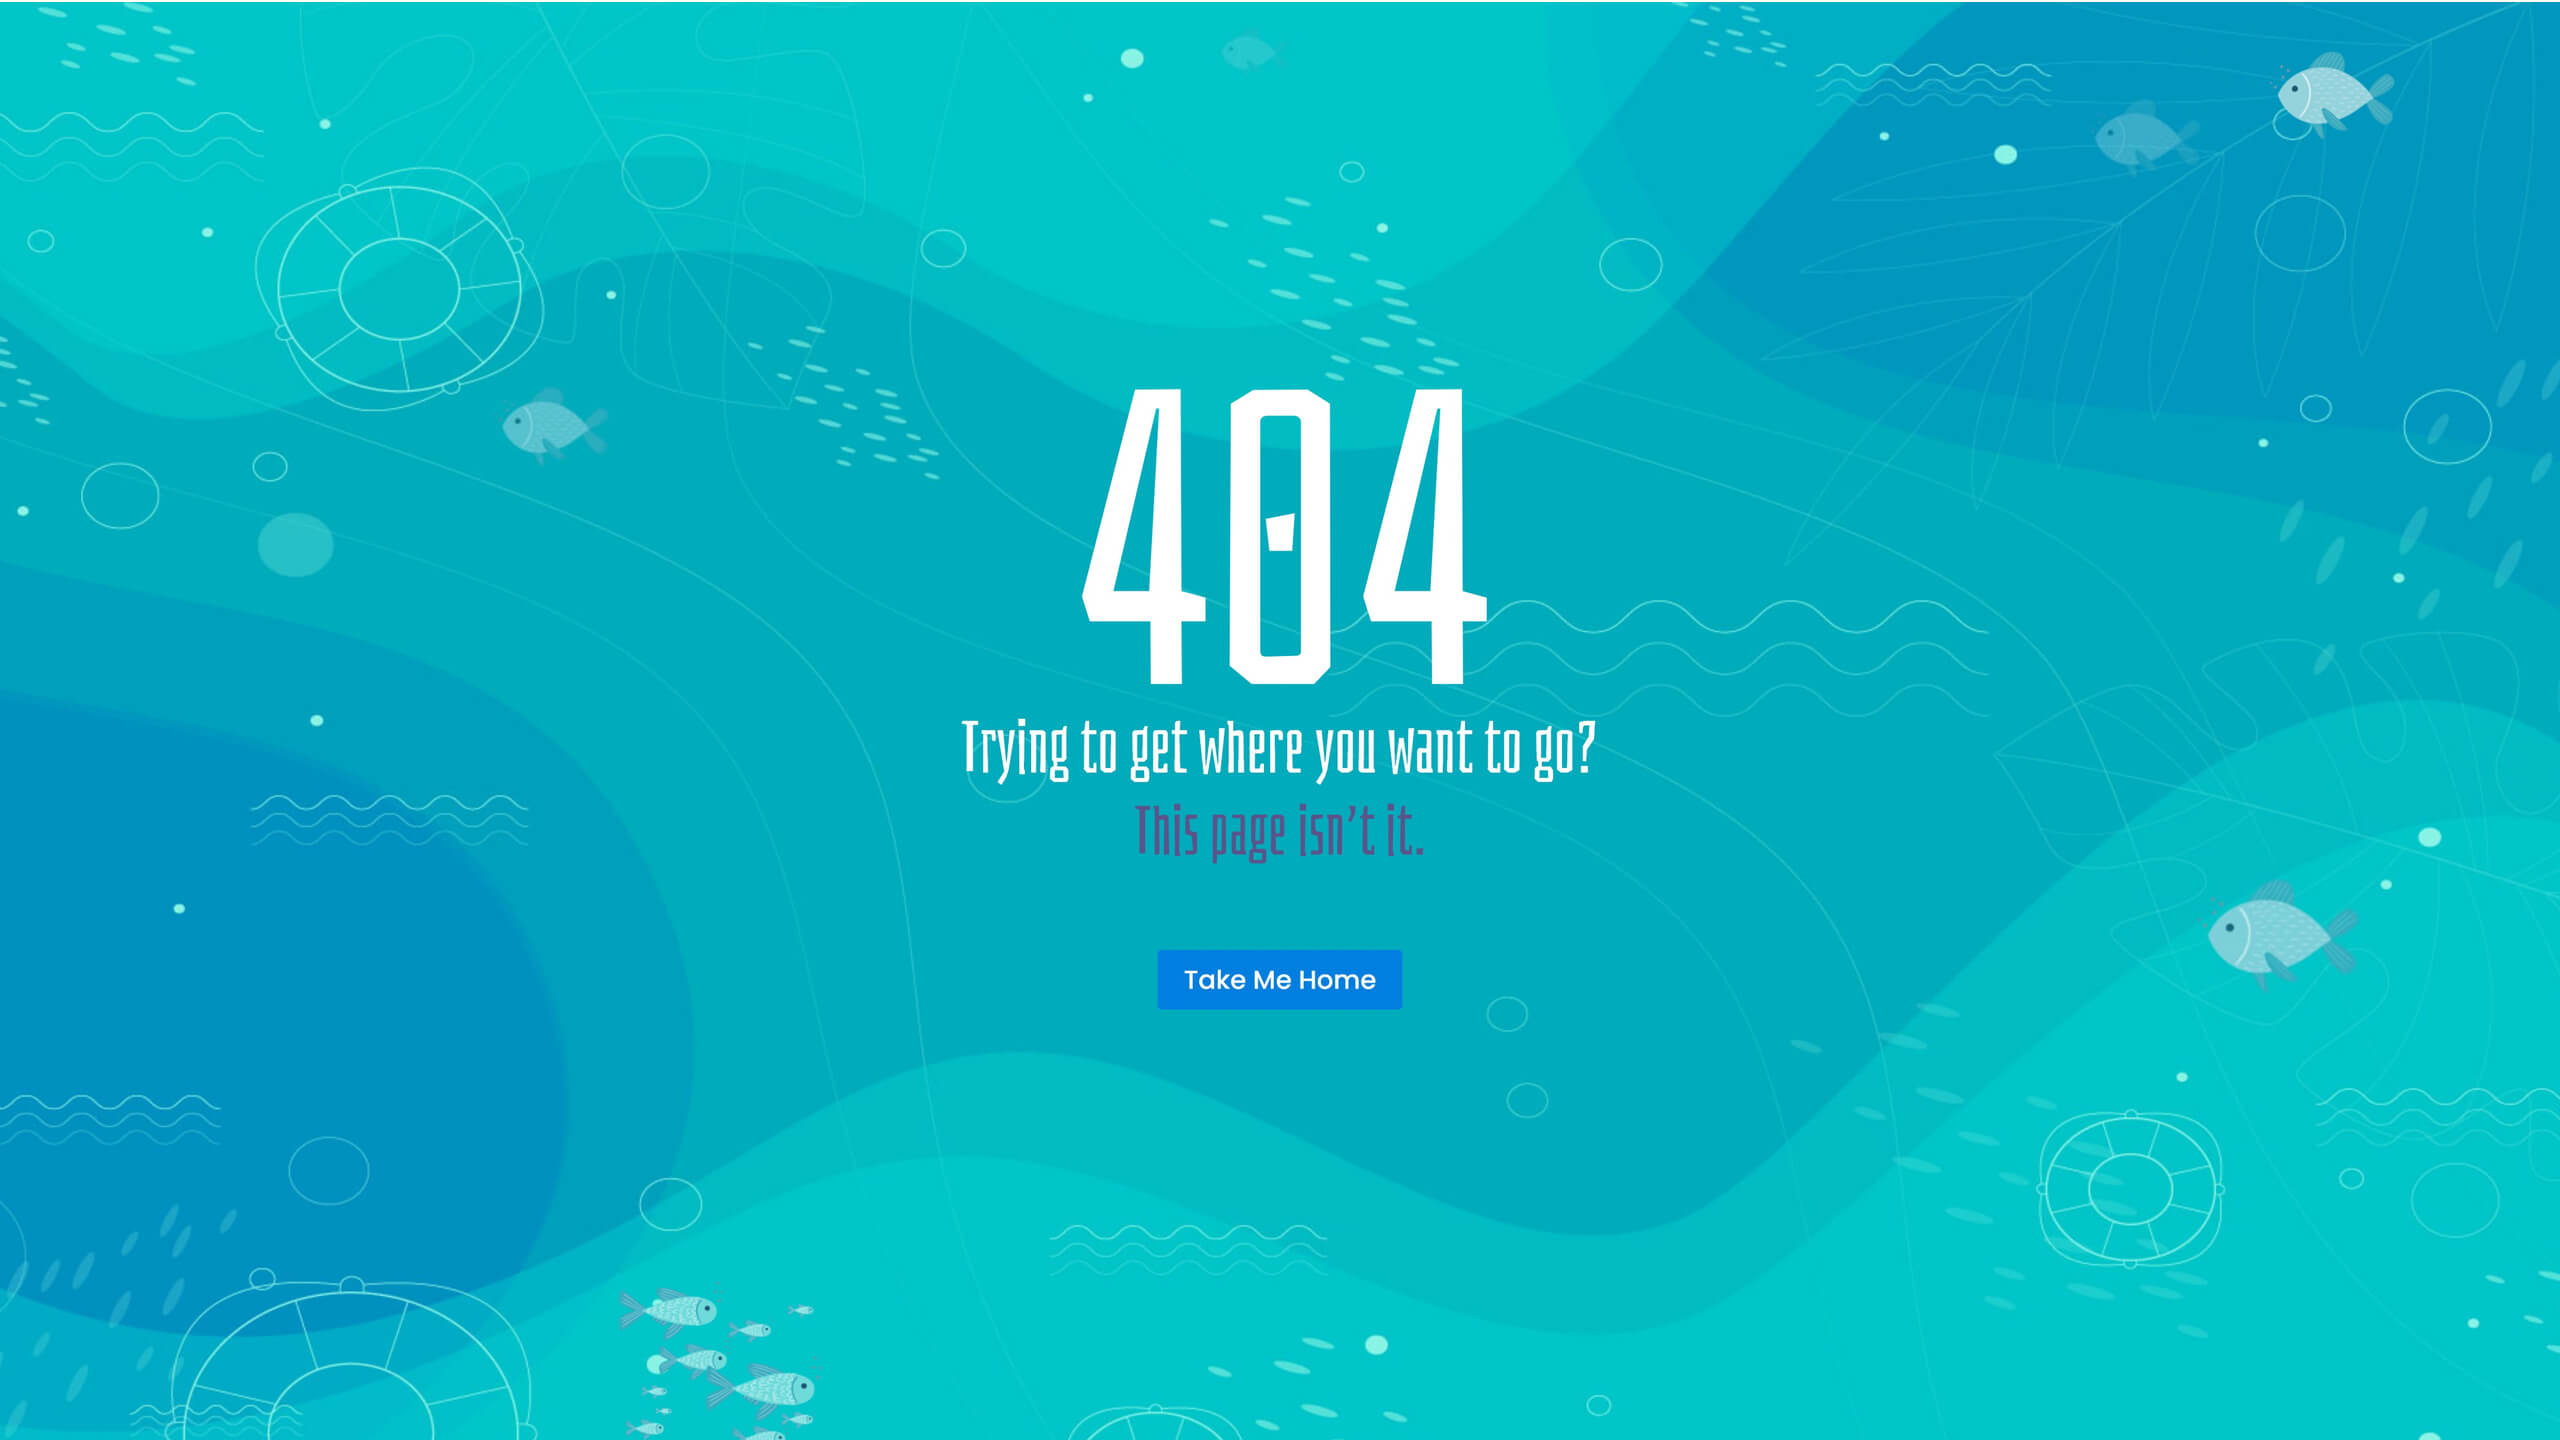 404 Error page Under Sea Layout by Divi.expert